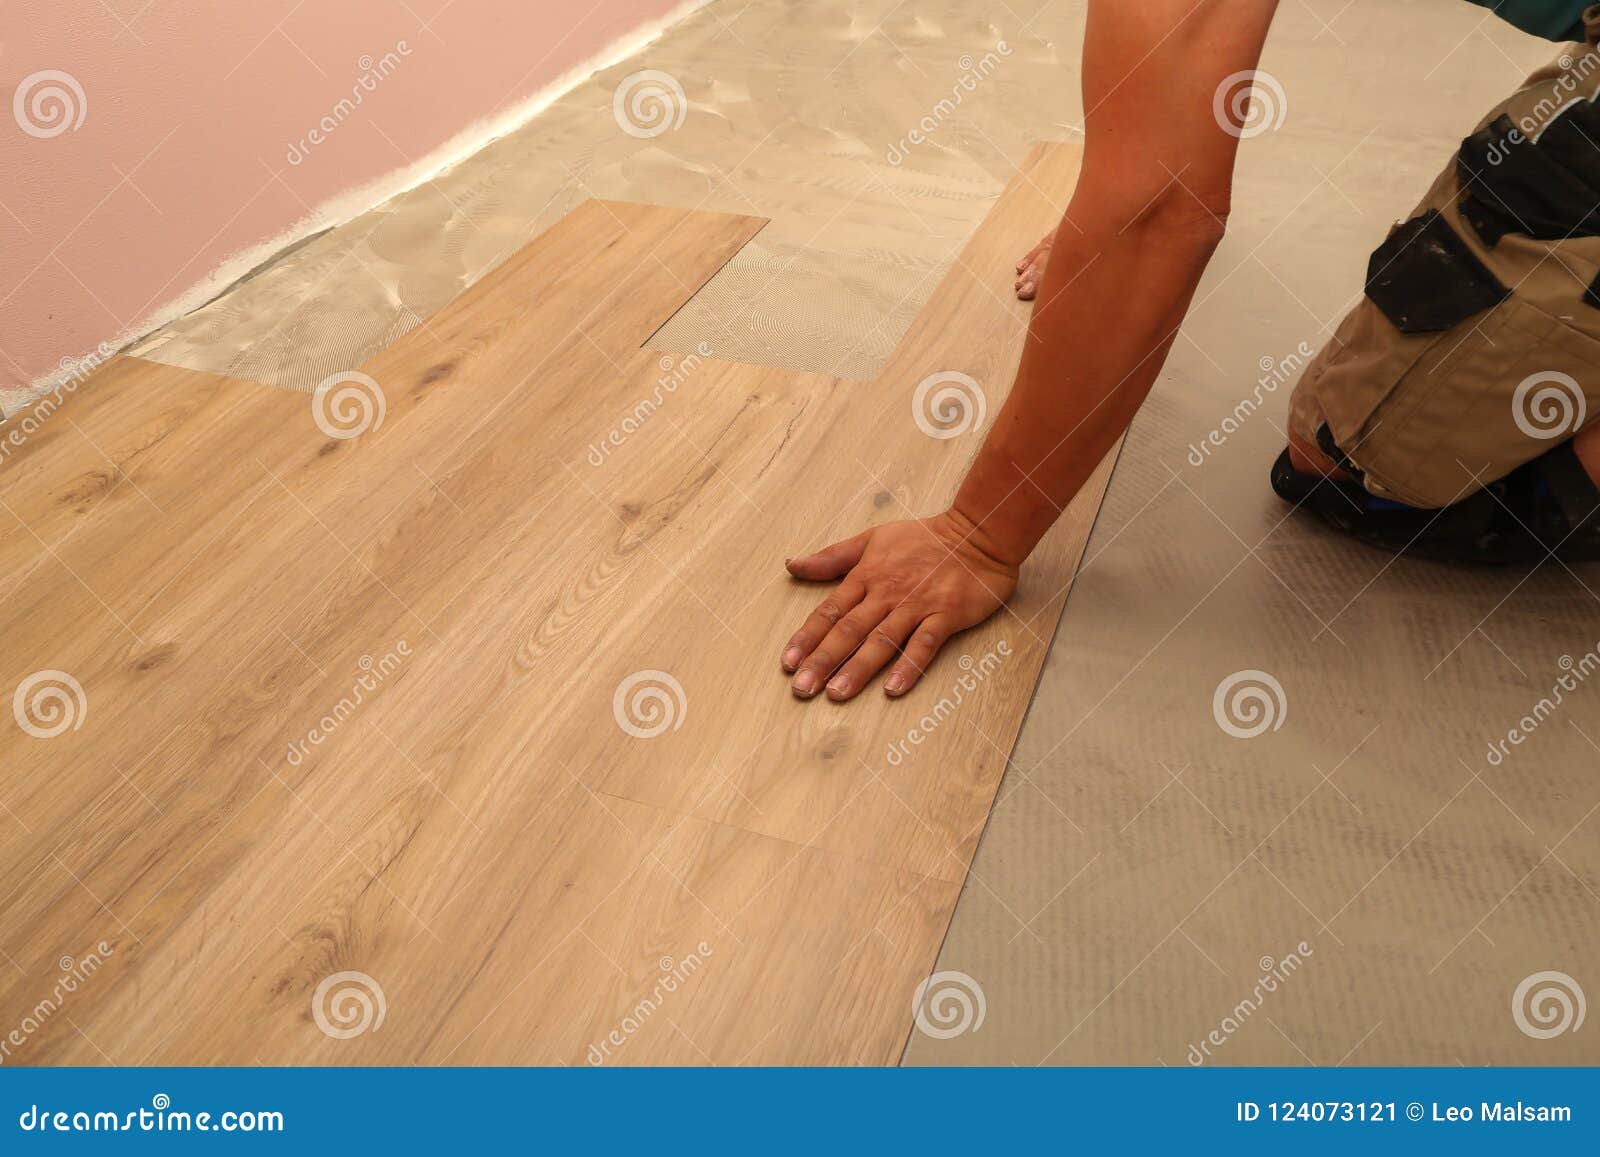 Work On Laying Flooring Stock Image Image Of Work Laying 124073121